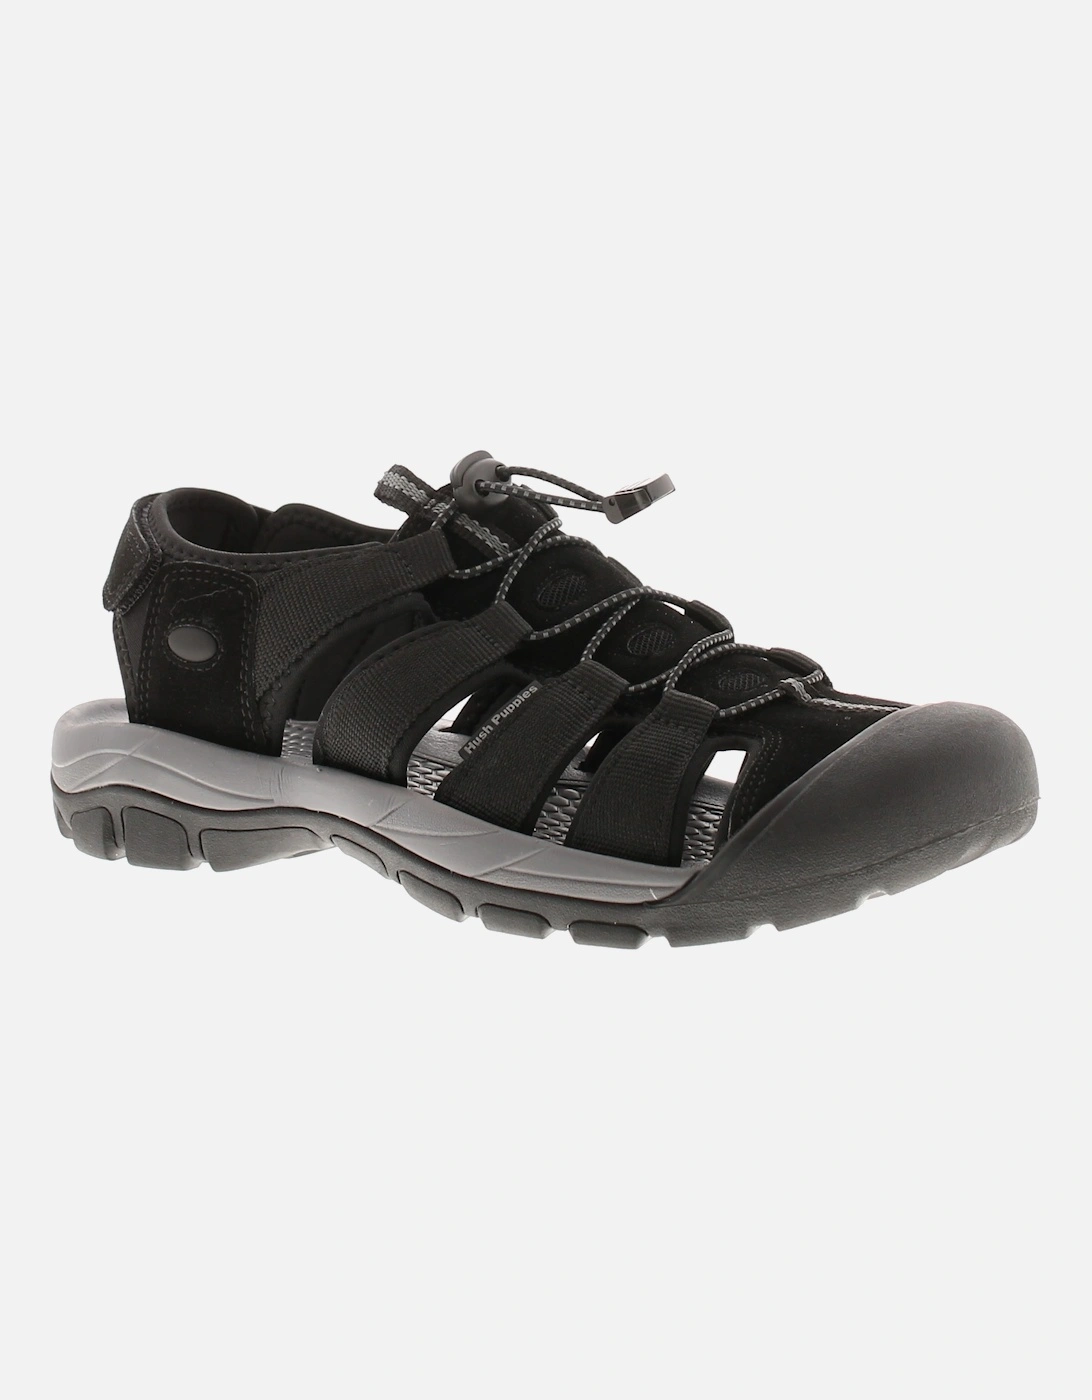 Mens Walking Sandals Closed Toe Peru Strap black UK Size, 6 of 5